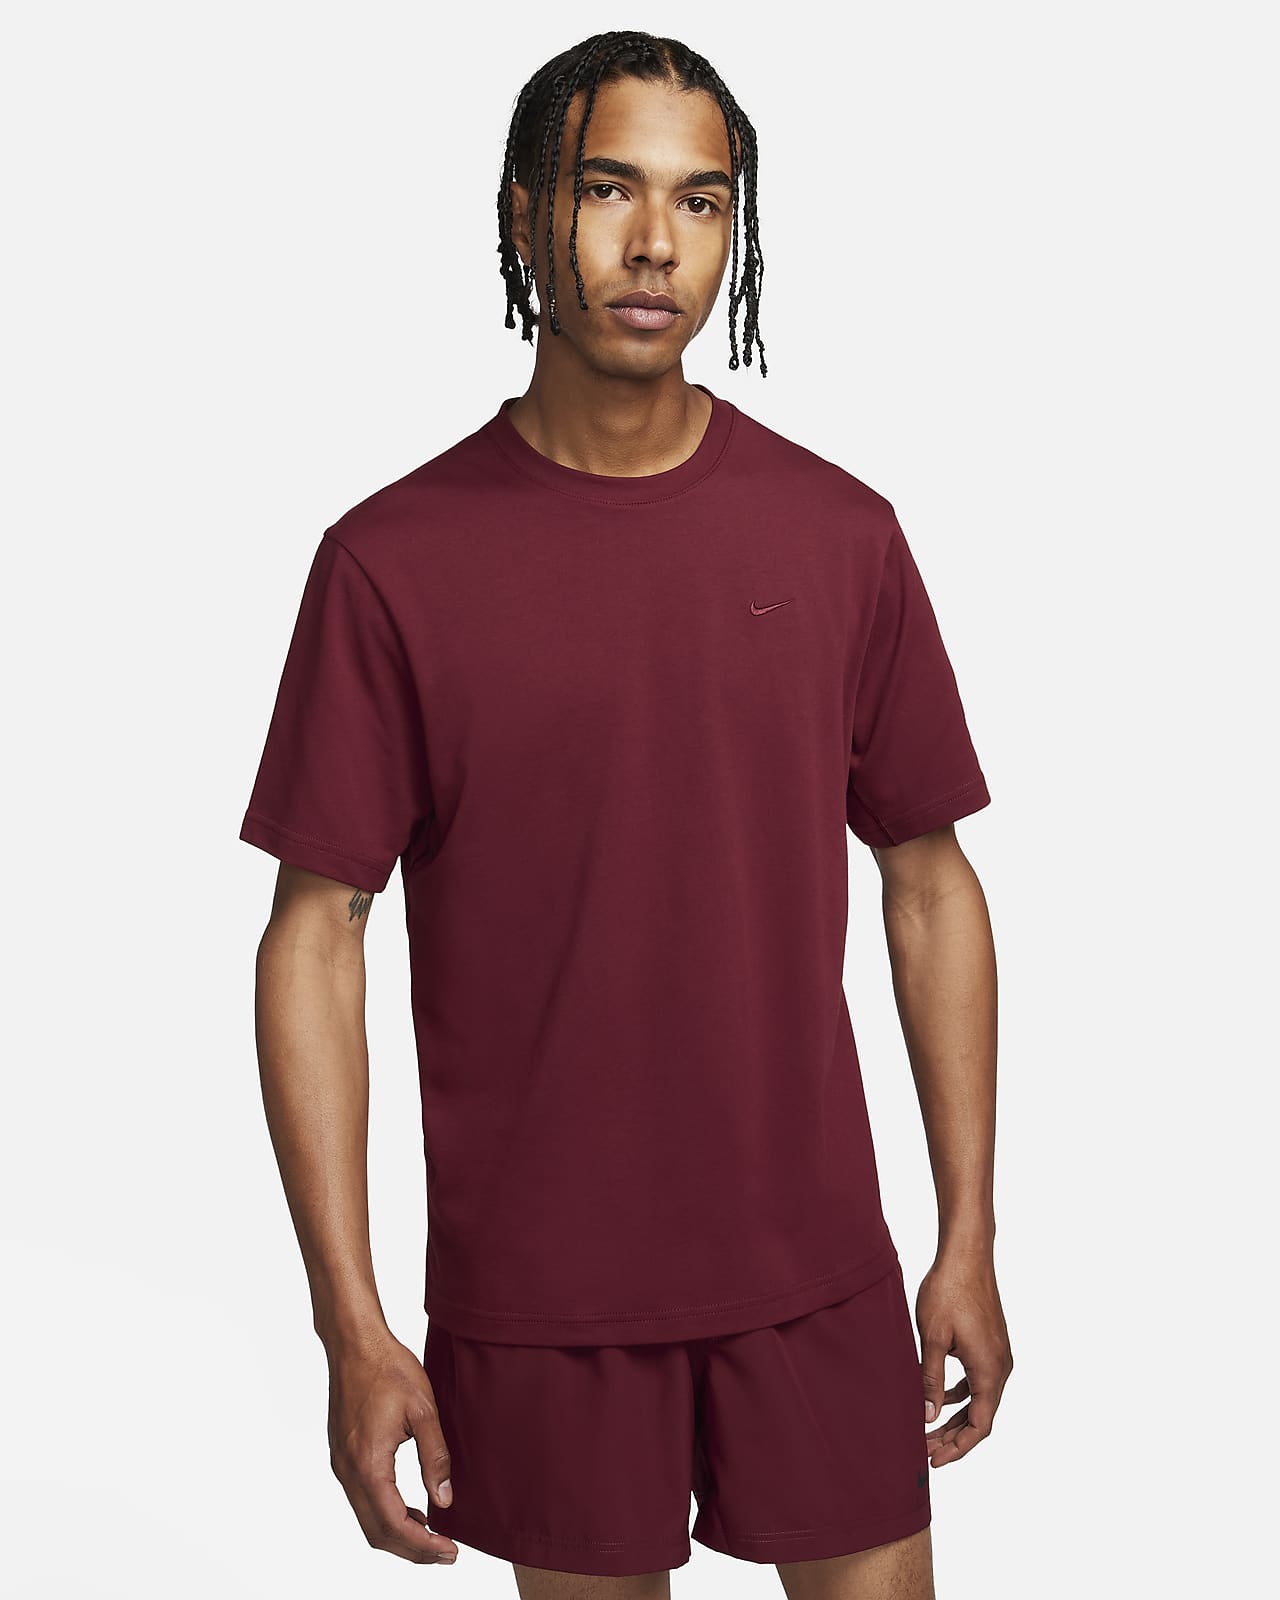 Nike Primary Men's Dri-FIT Short-Sleeve Versatile Top